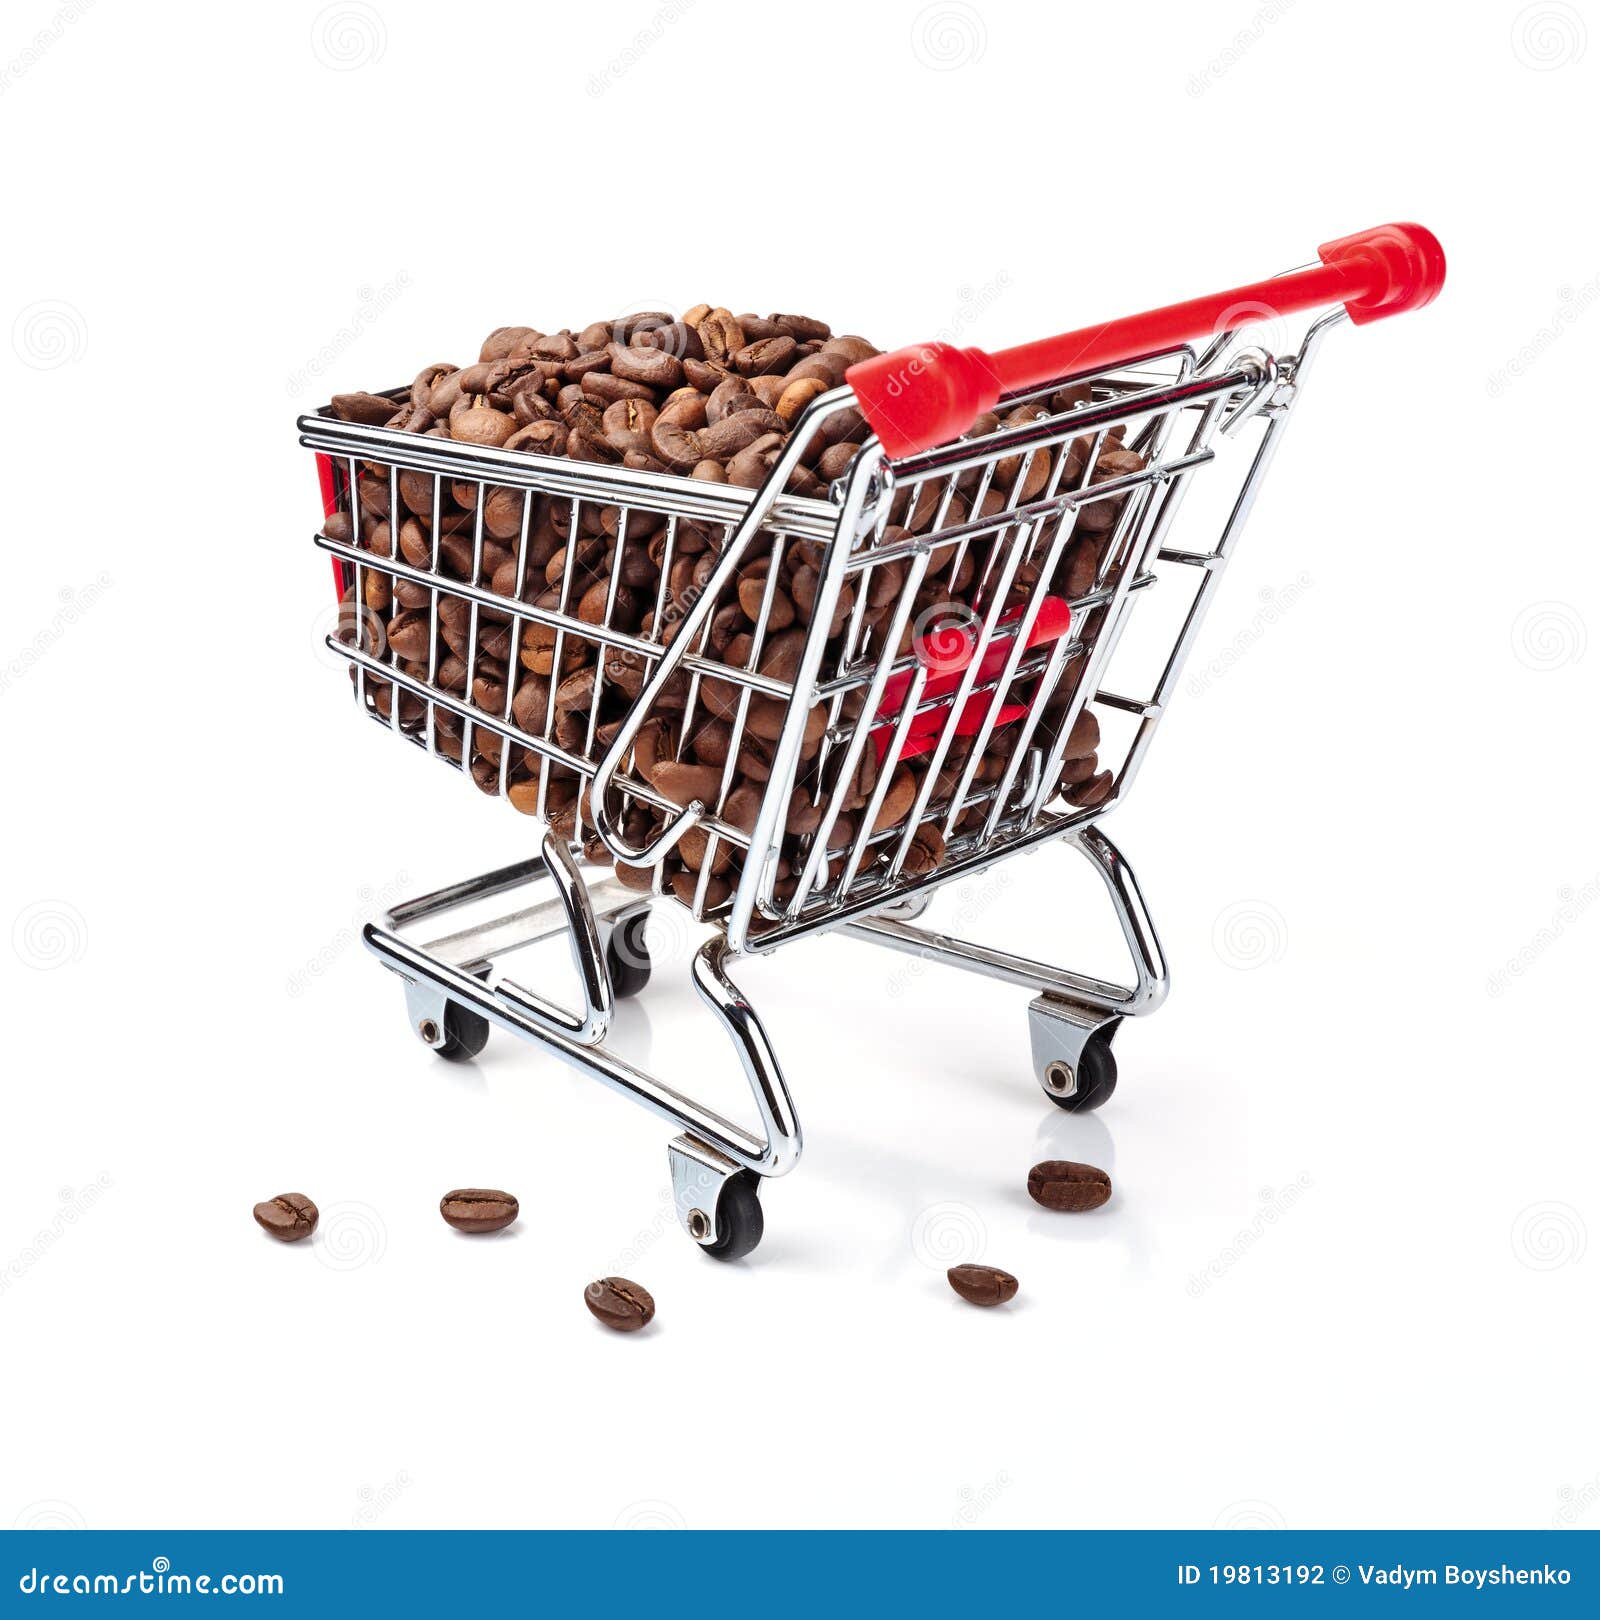 shopping-cart-filled-coffee-beans-19813192.jpg